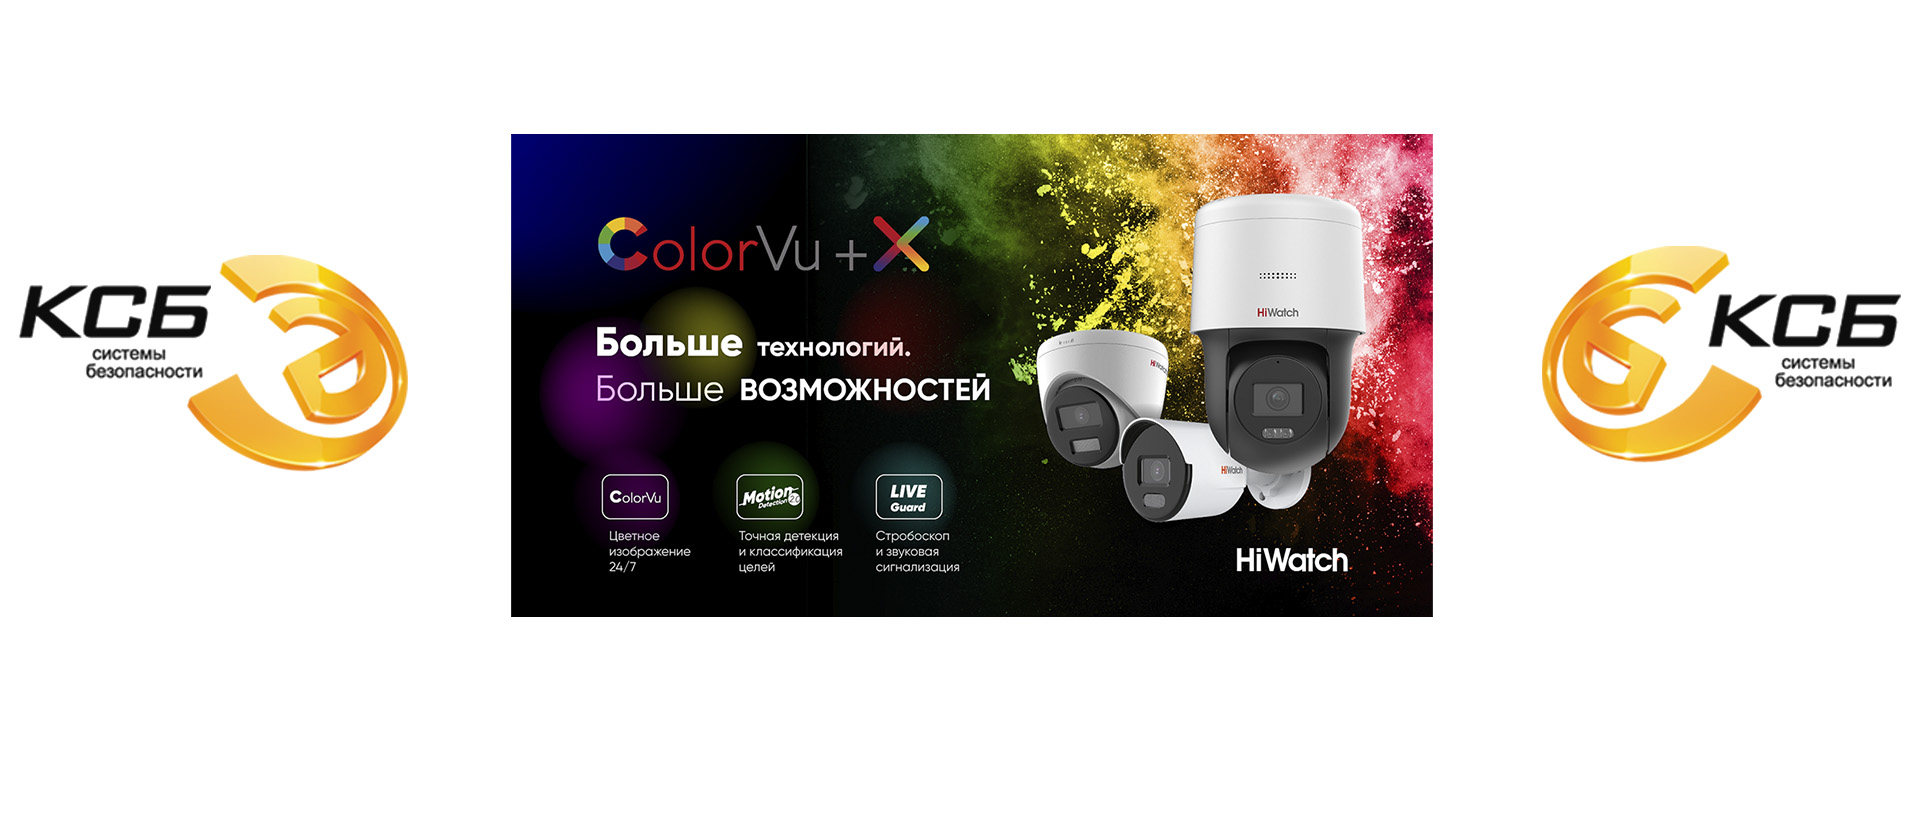 IP-камеры HiWatch Value c технологией ColorVu